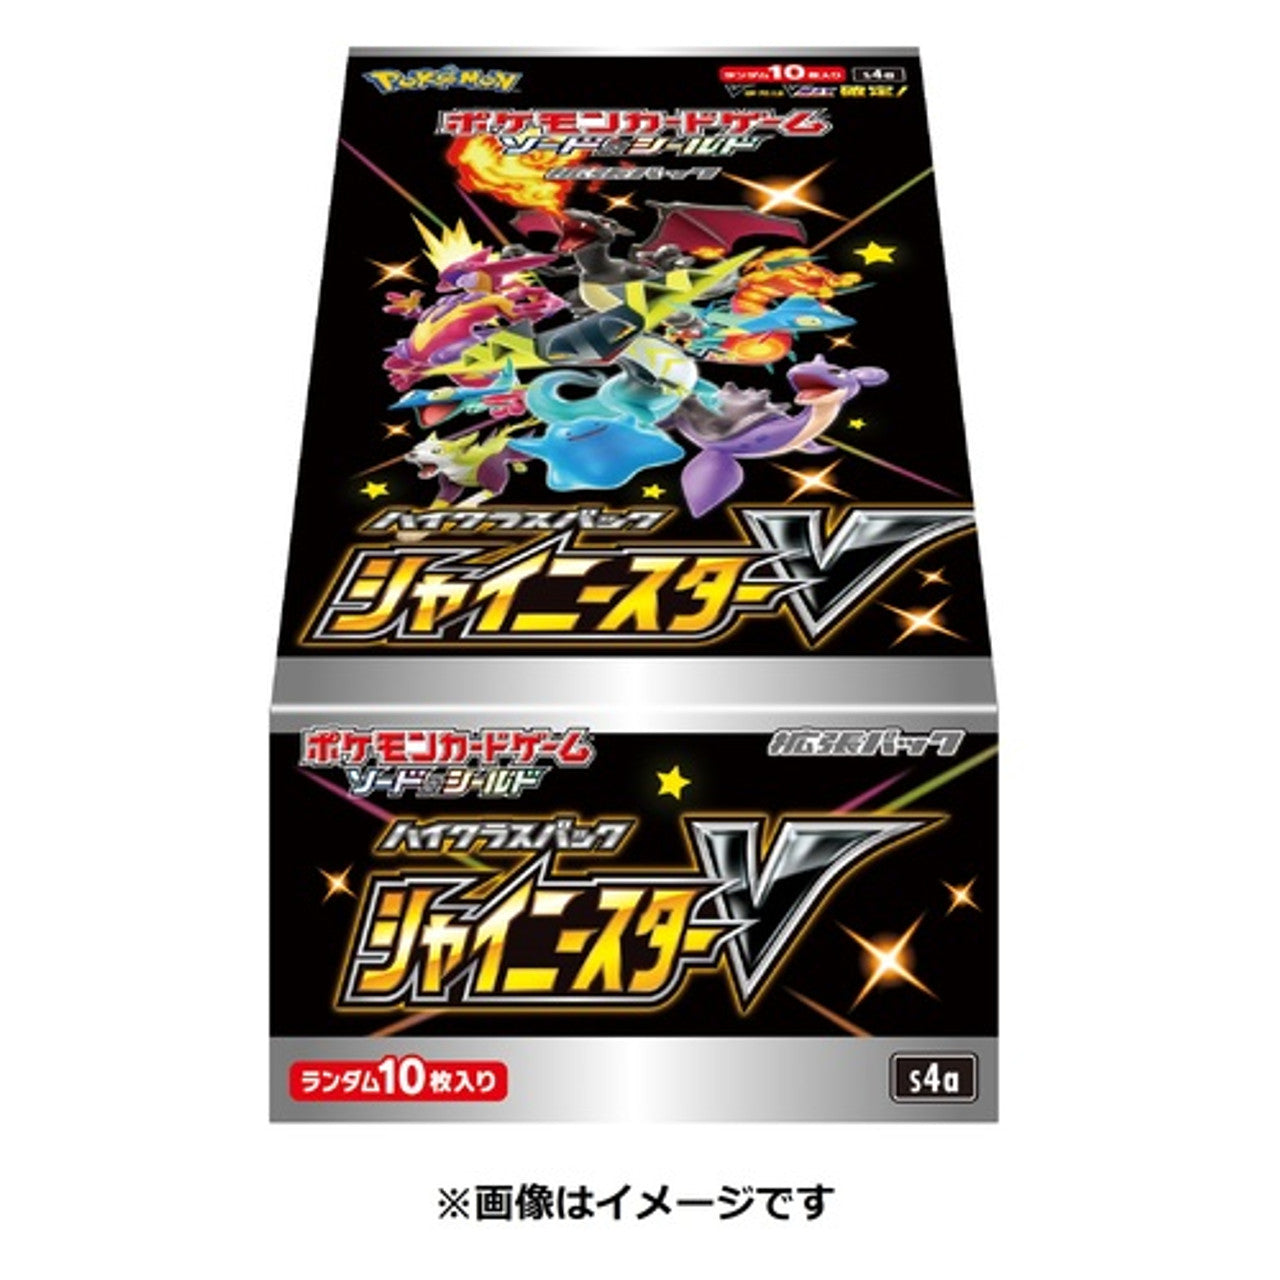 Pokemon Sword & Shield S4a High Class Pack Shiny Star V Box - Japanese - Miraj Trading